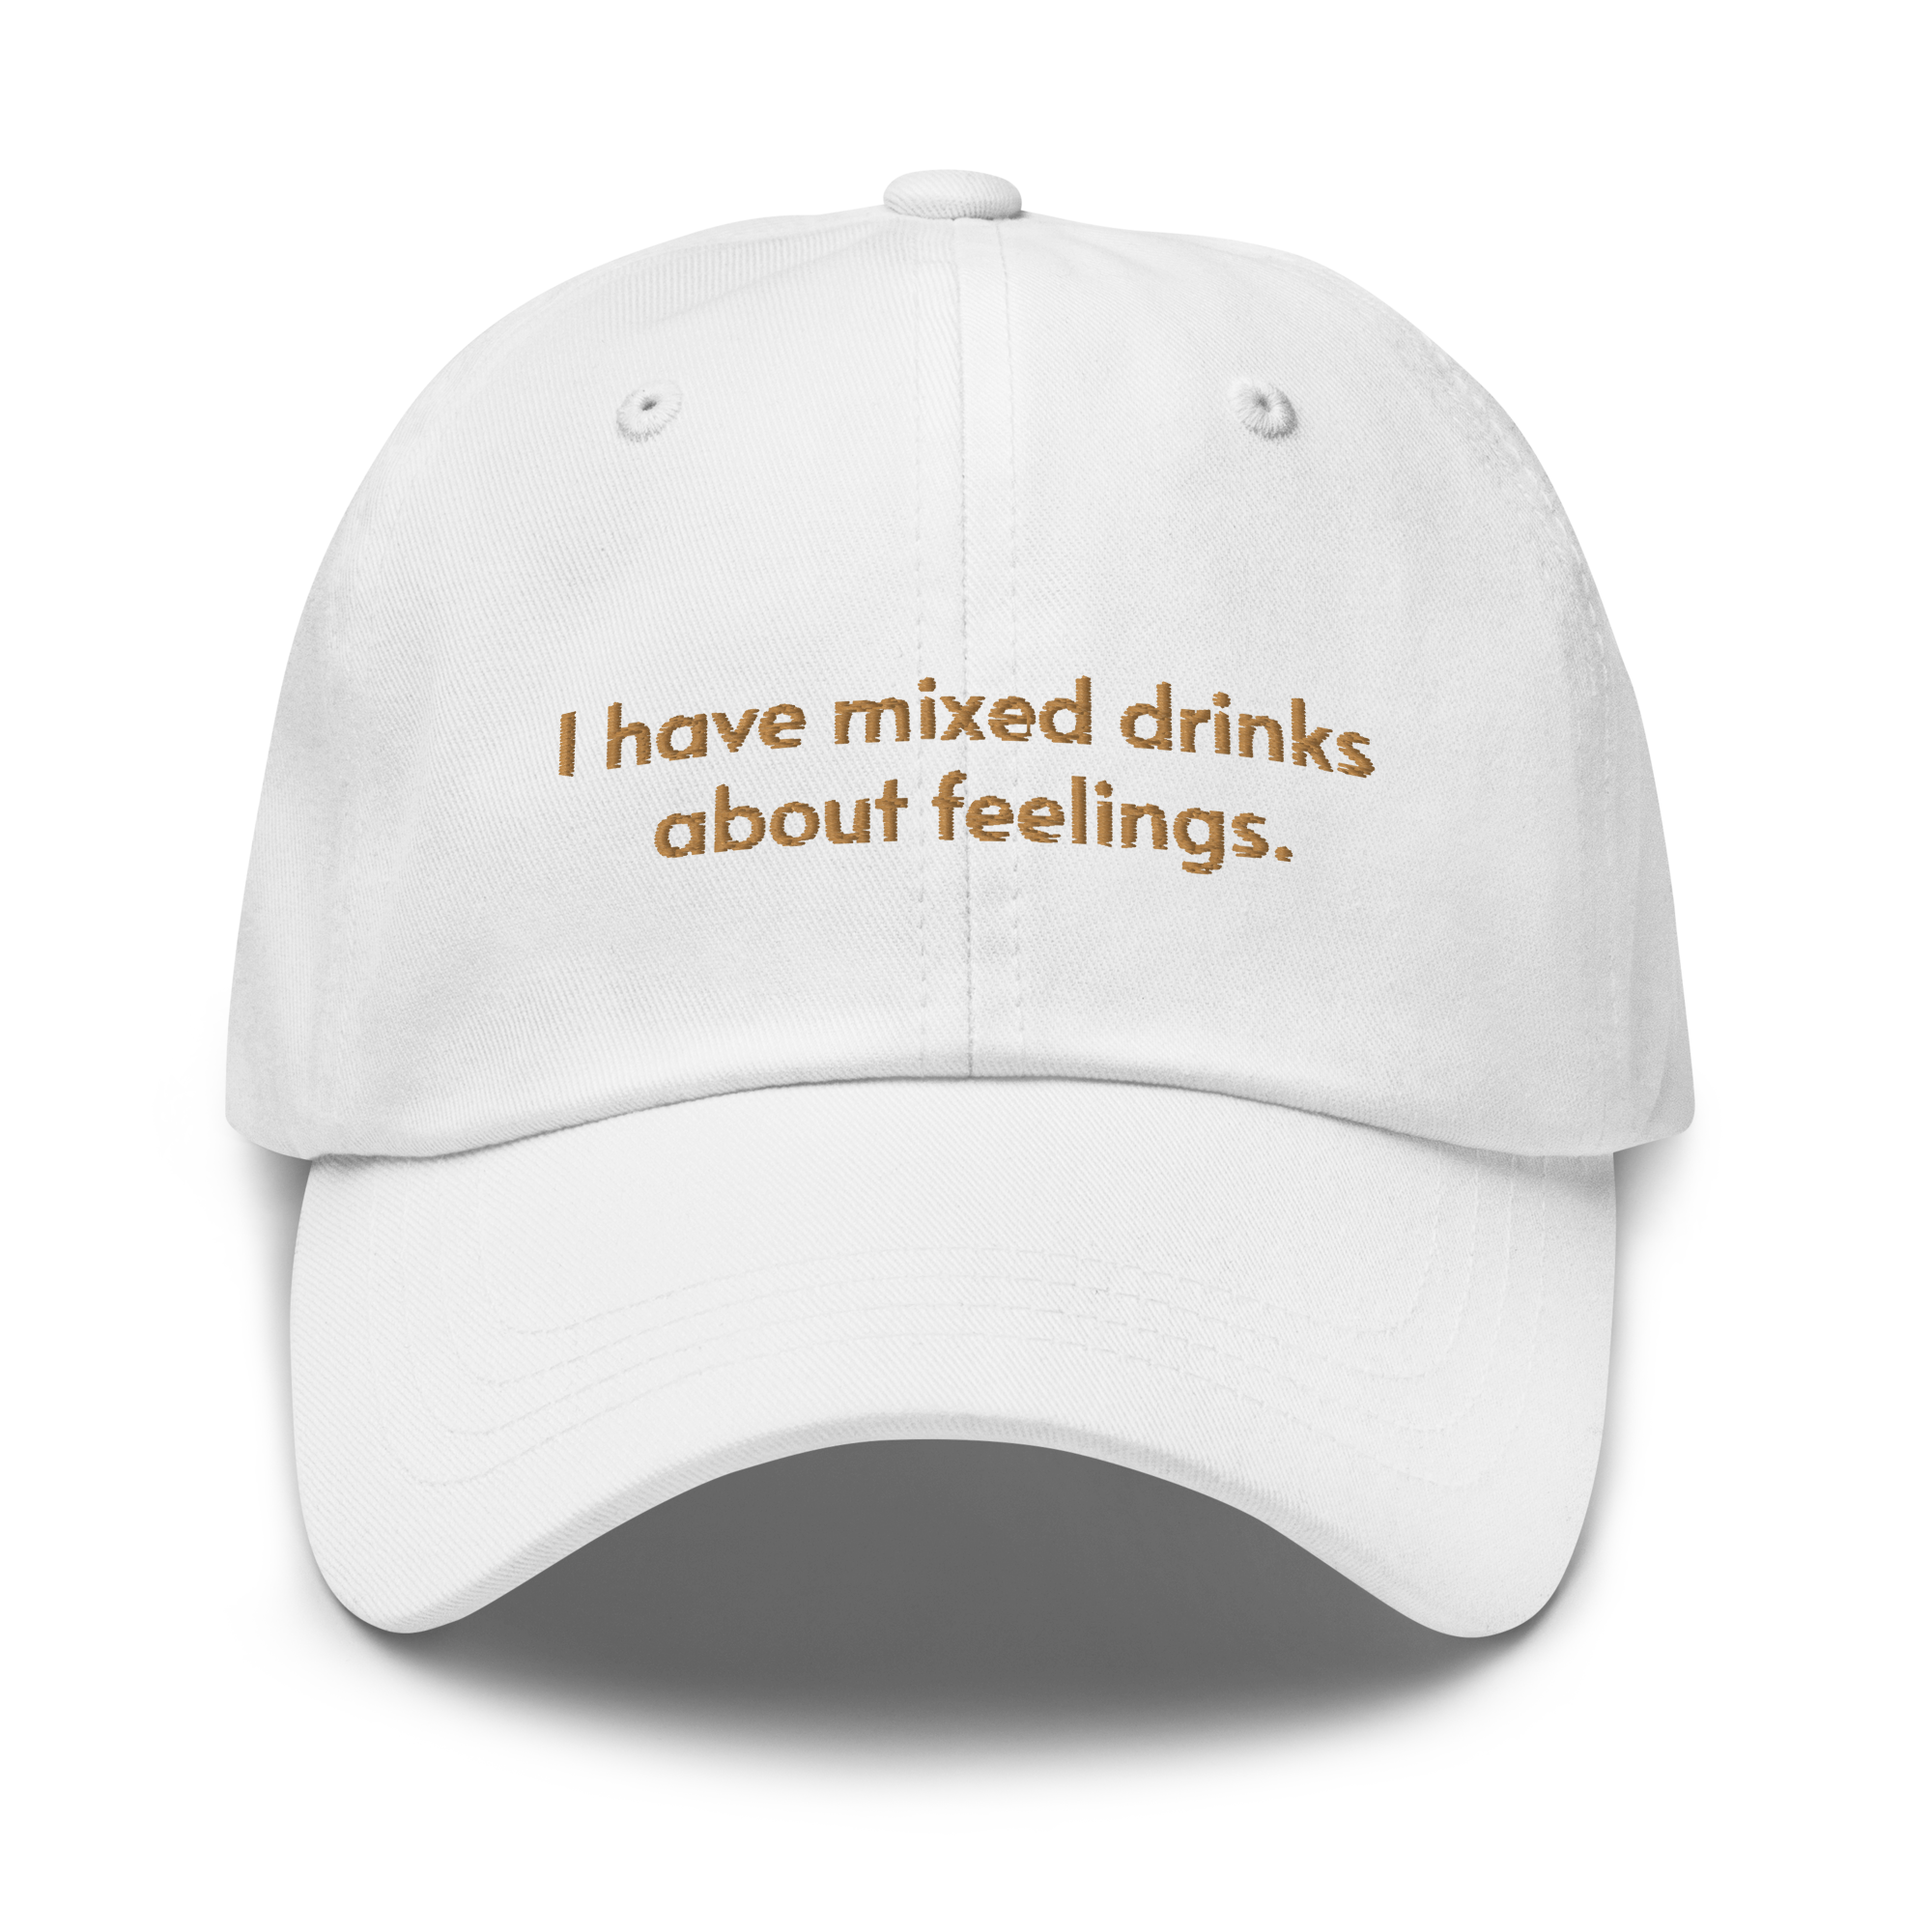 Mixed drinks cap